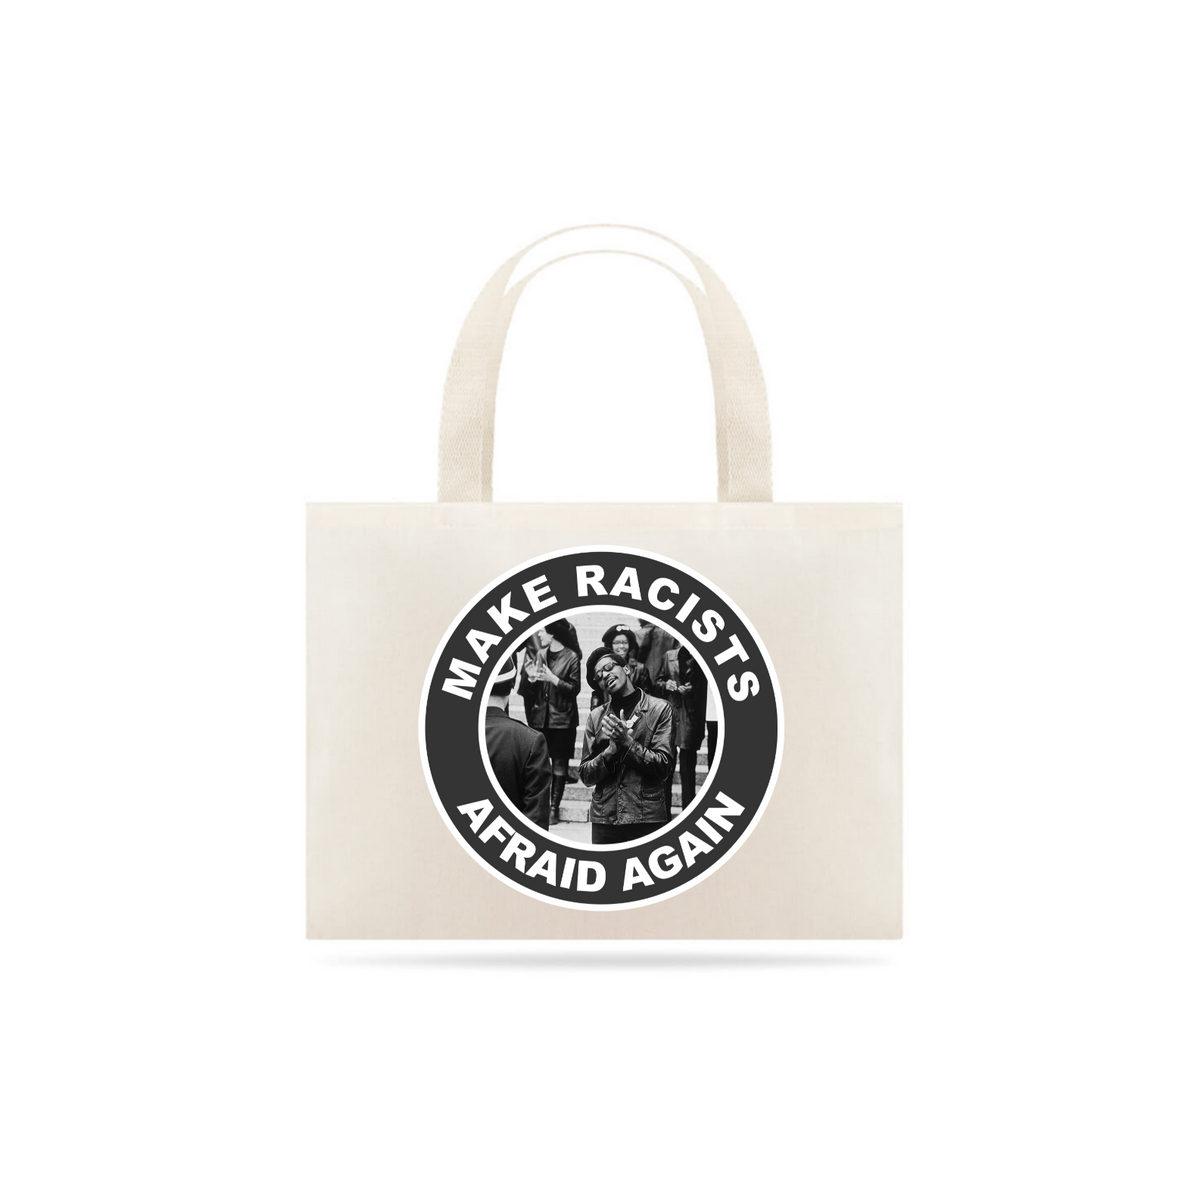 Nome do produto: Ecobag Racists Afraid - Black Panther Party